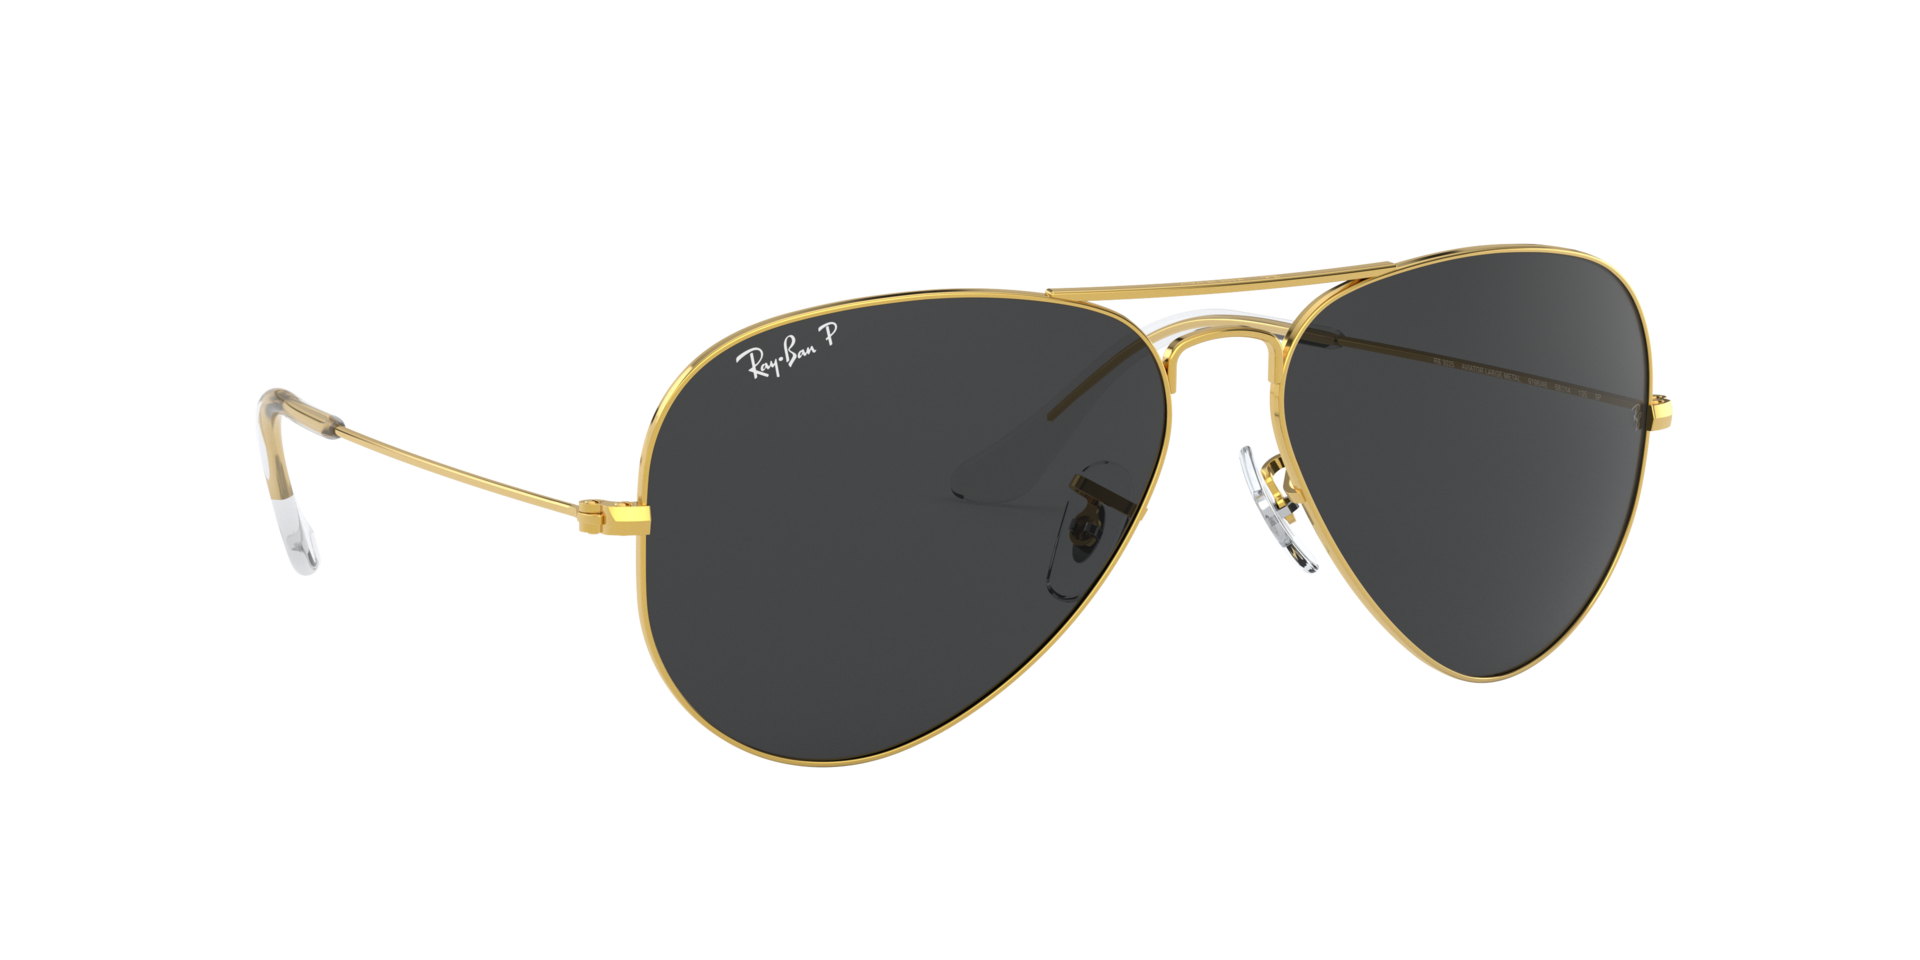 Buy Ray-Ban Aviator Full Color Legend Sunglasses Online.